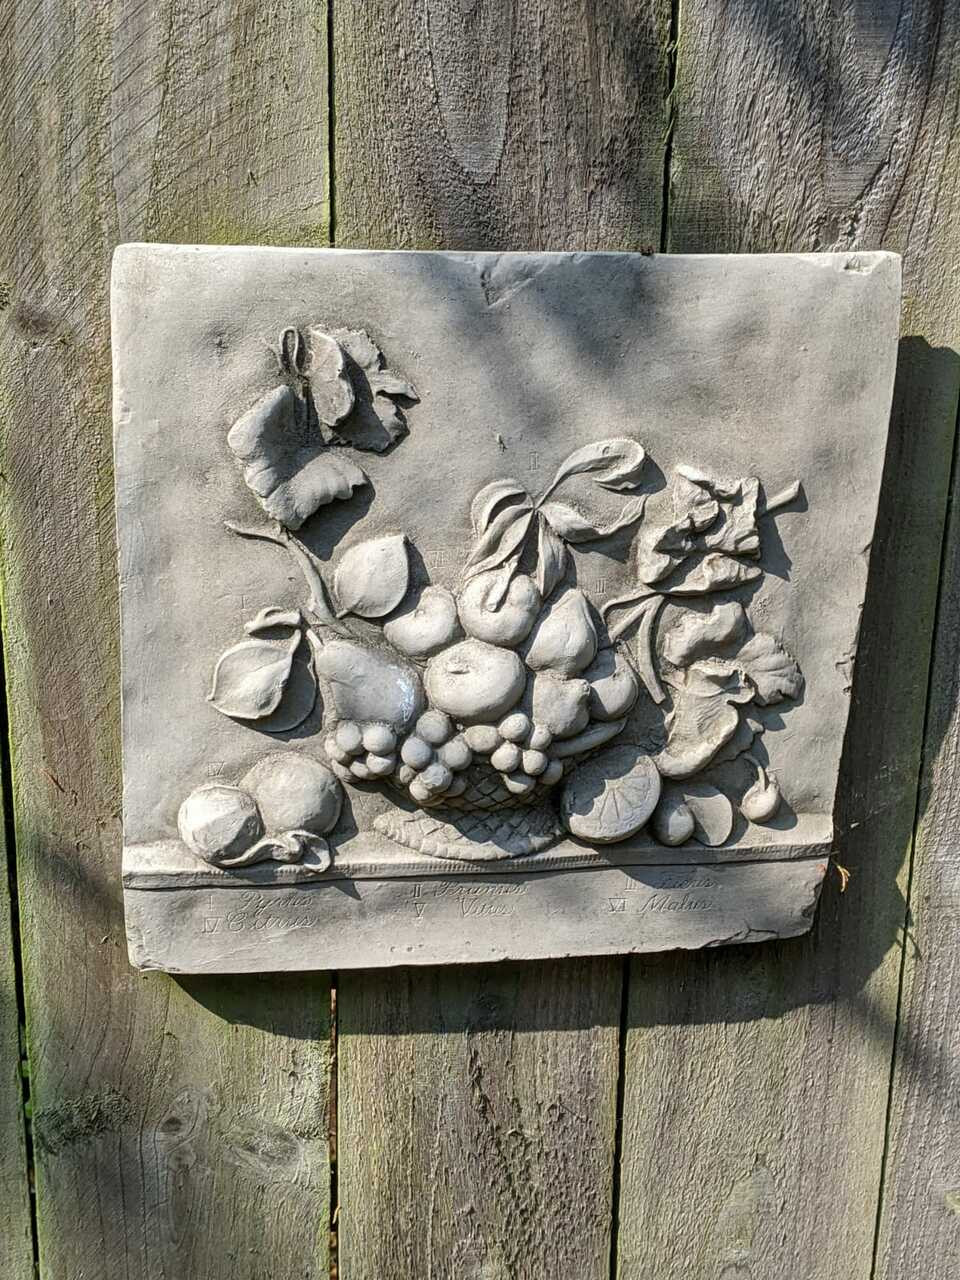 Stone Cast Fruit design Wall Plaque